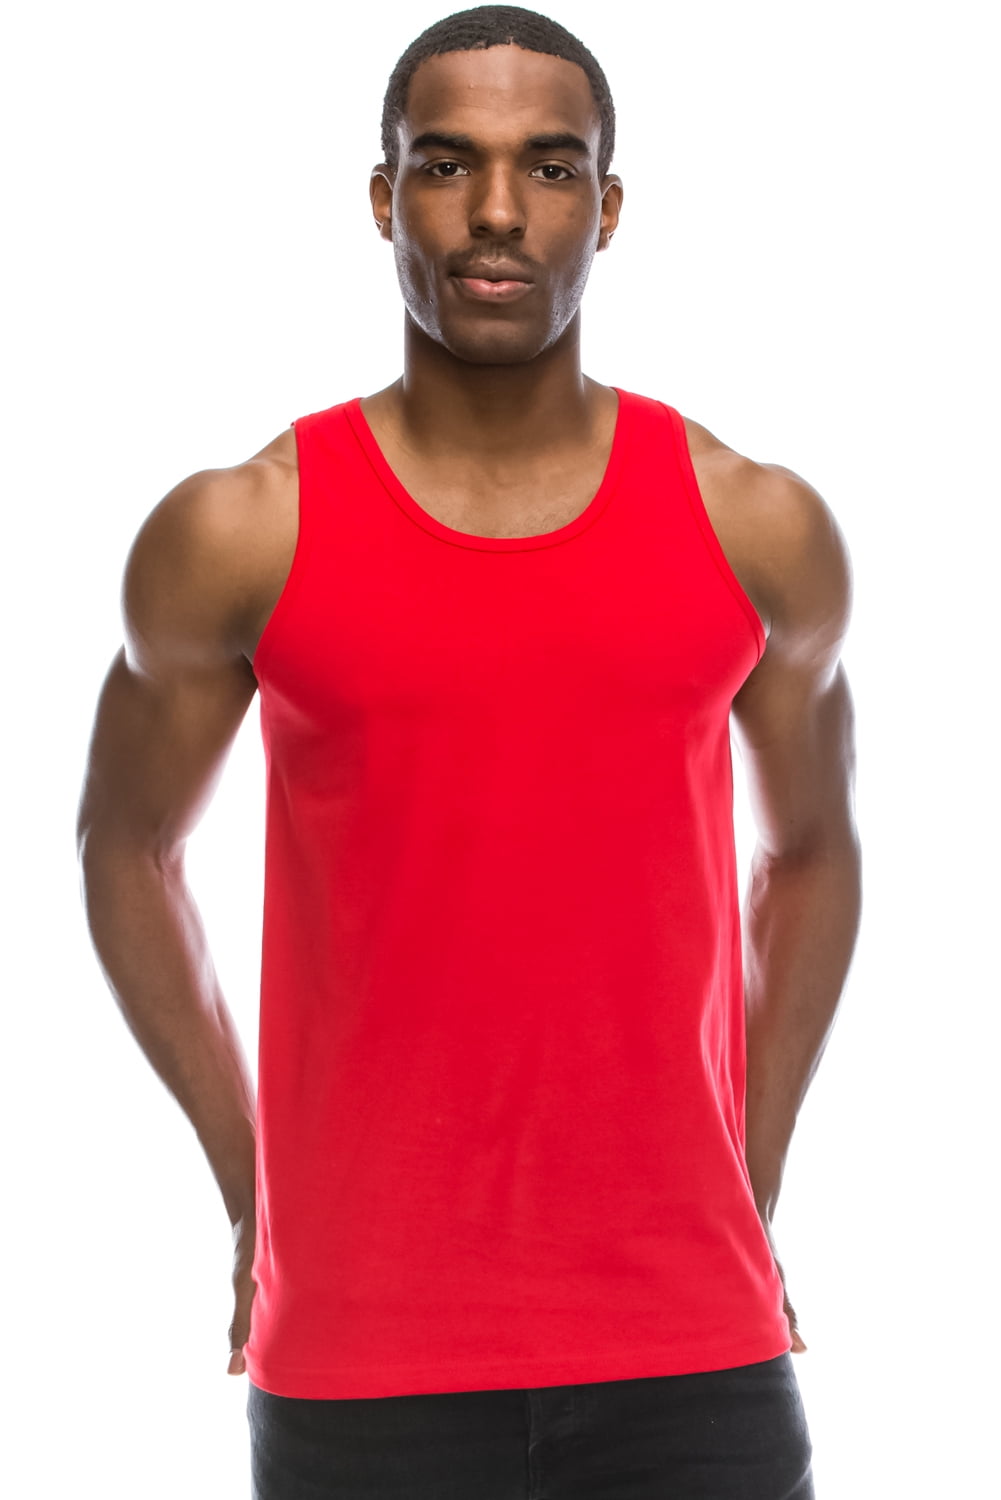 JC DISTRO - Men's Basic Solid Tank Top Jersey Casual Shirts - Walmart ...